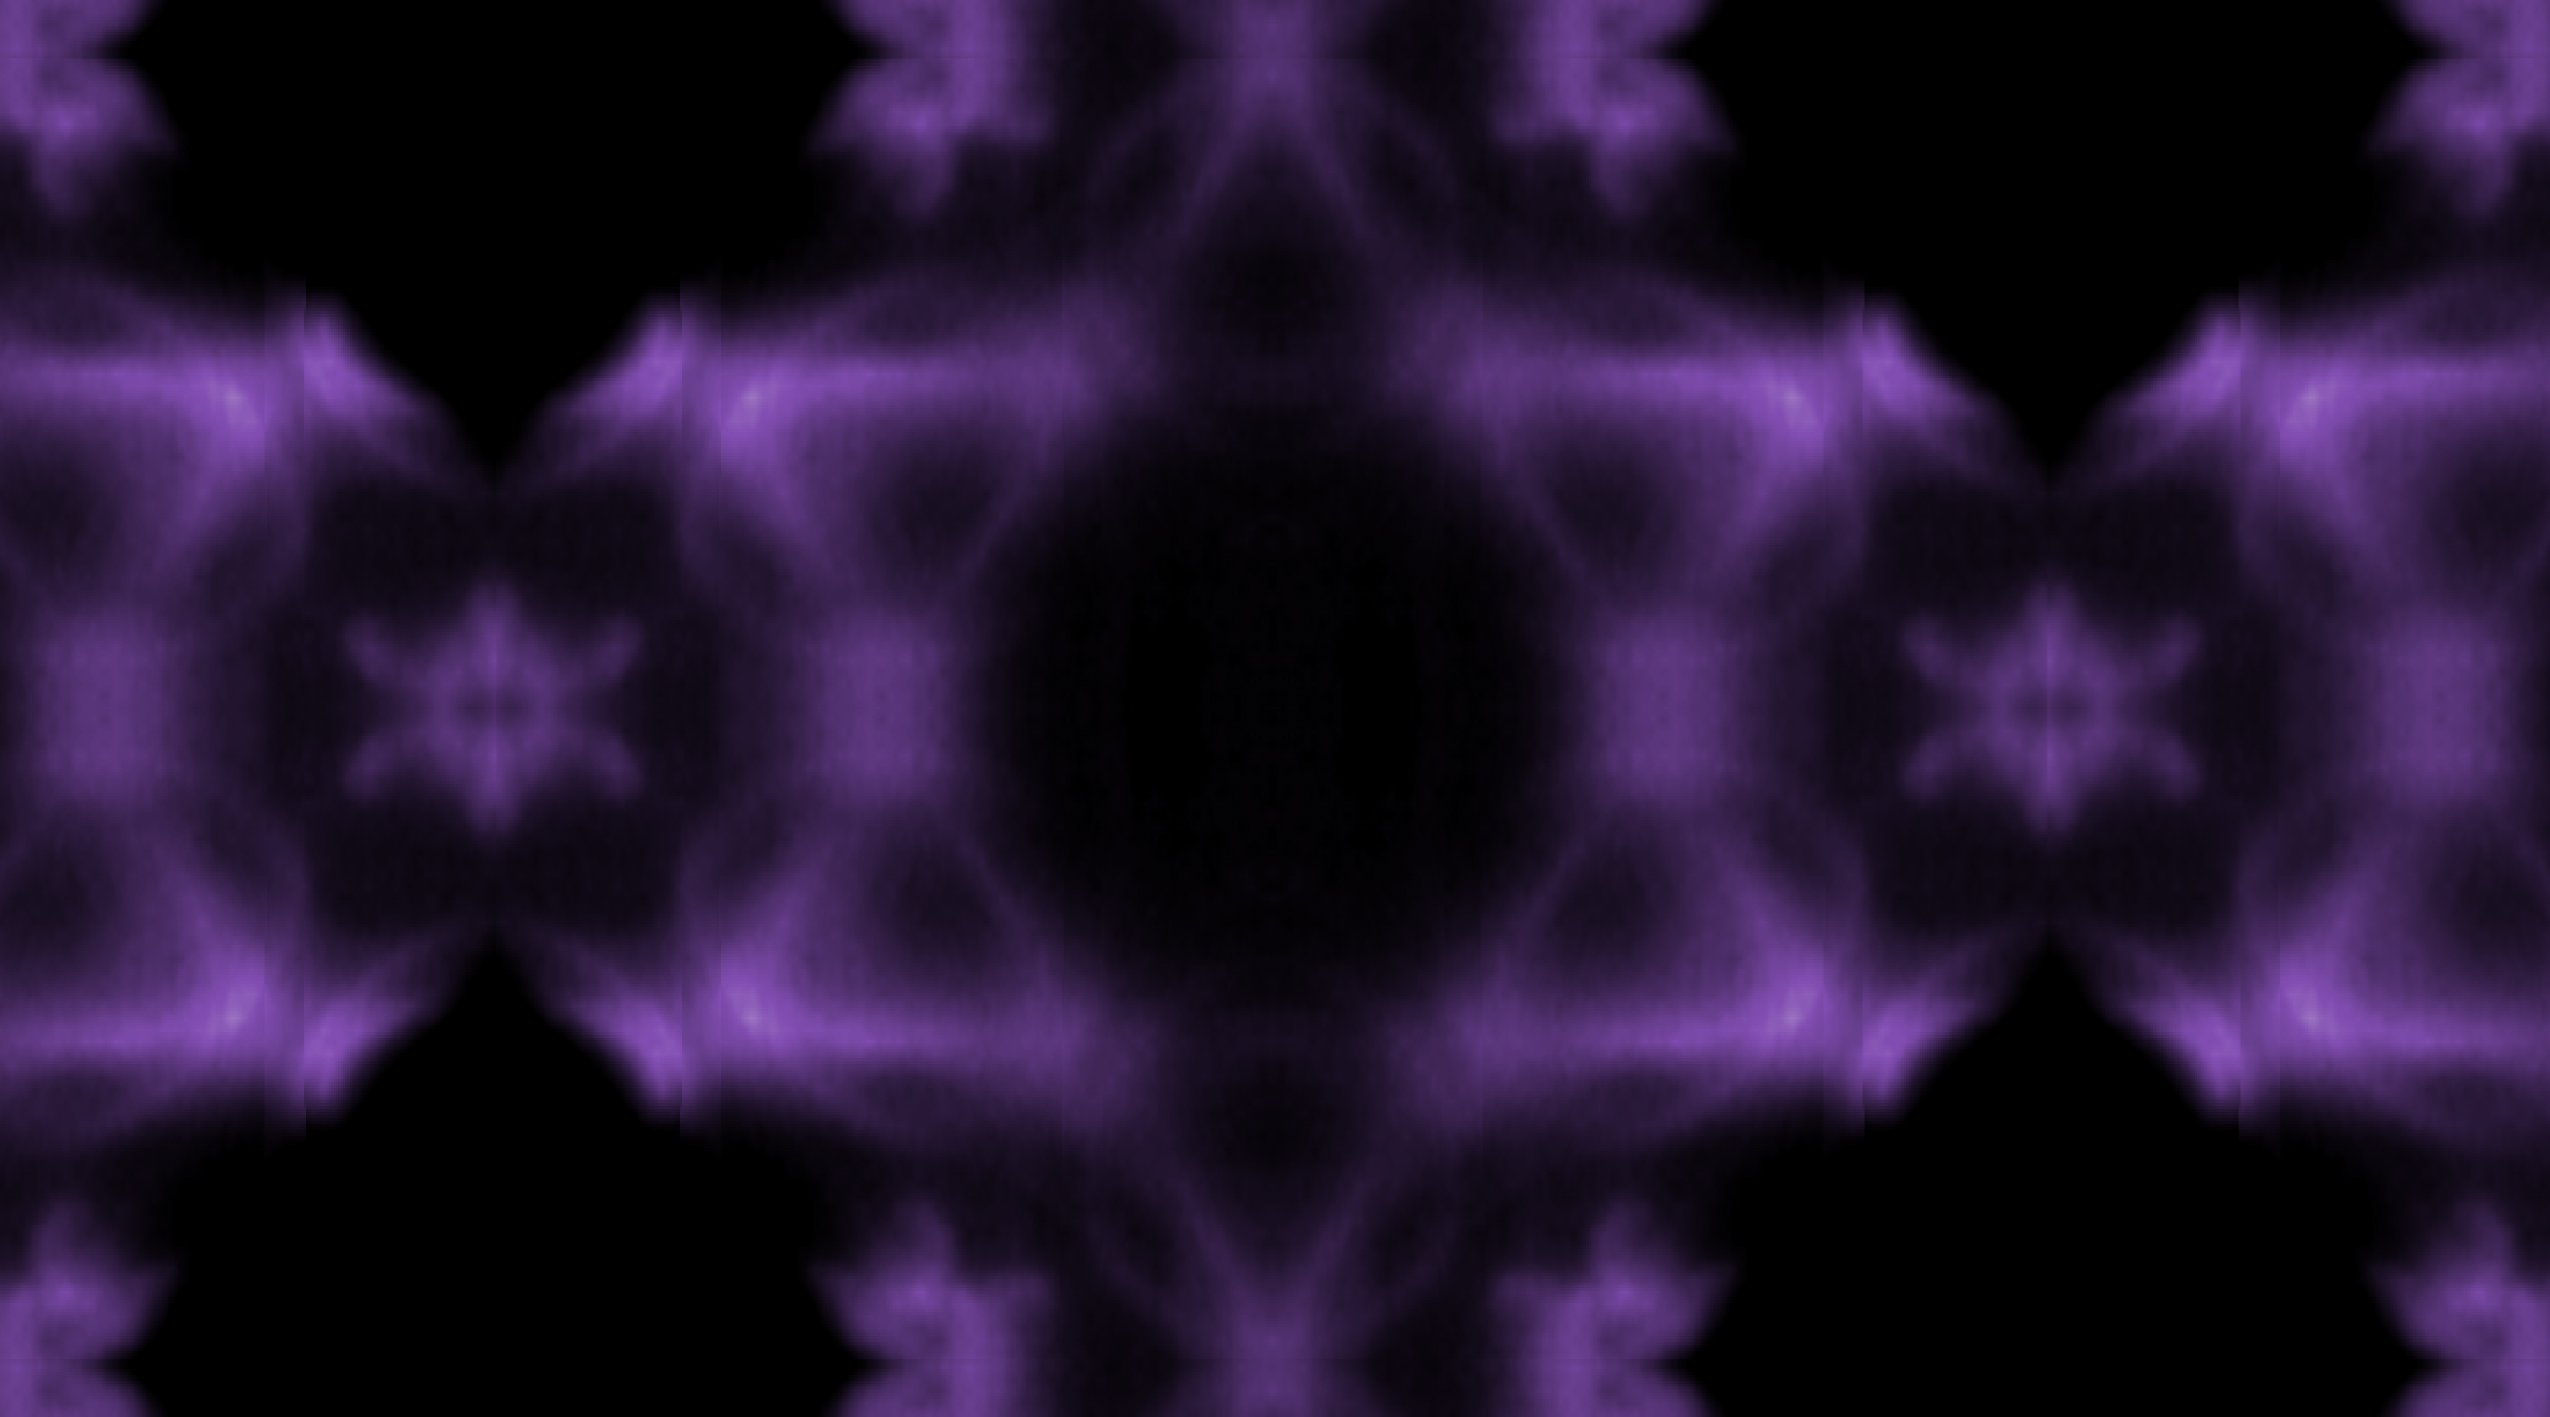 Purple ARPES data on black background.